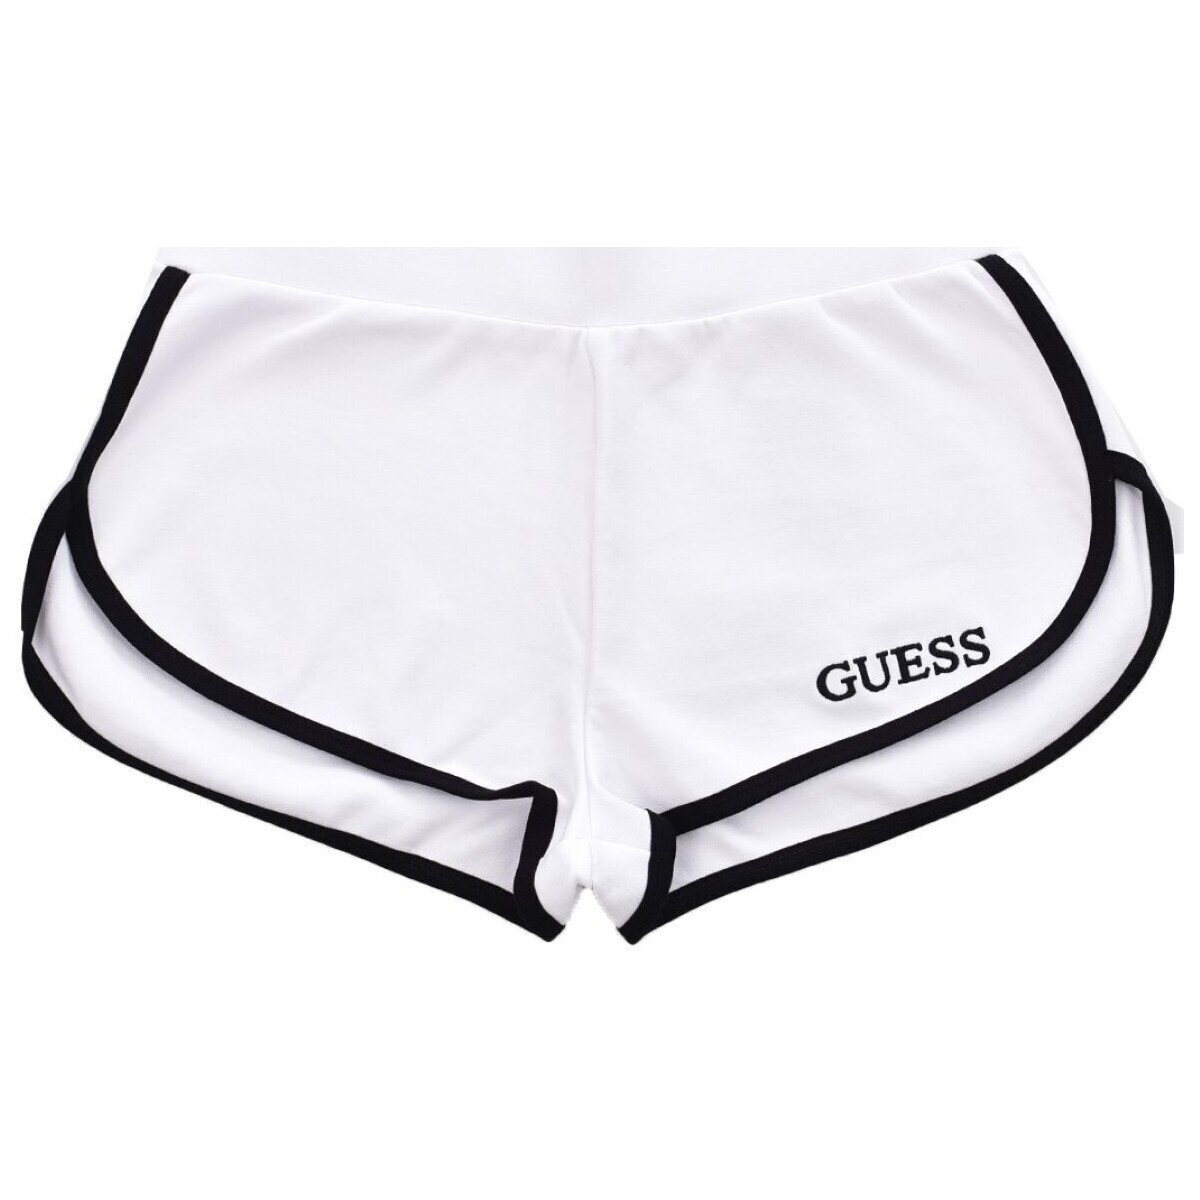 textil Shorts / Bermudas Guess E4GD04 KBP41 - Mujer Blanco